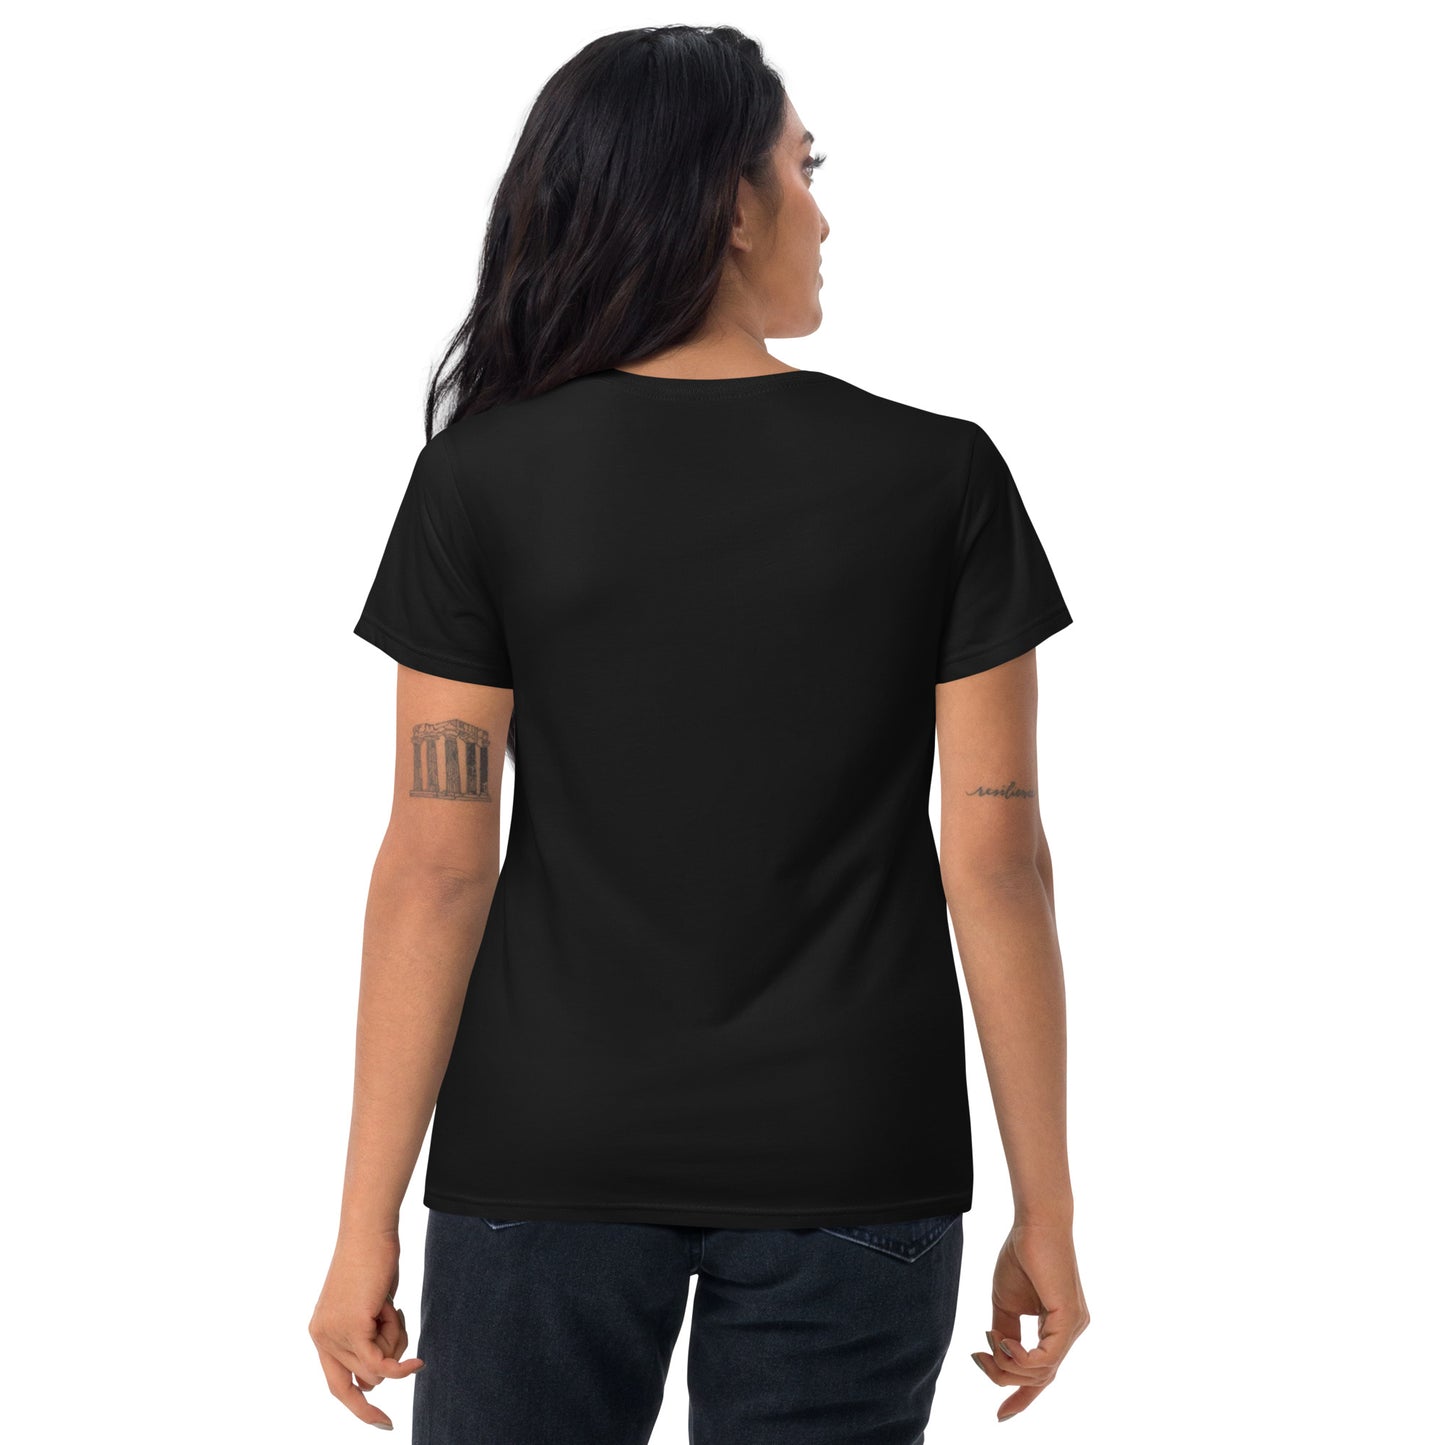 Mr. Darcy & Pizza Women's short sleeve t-shirt